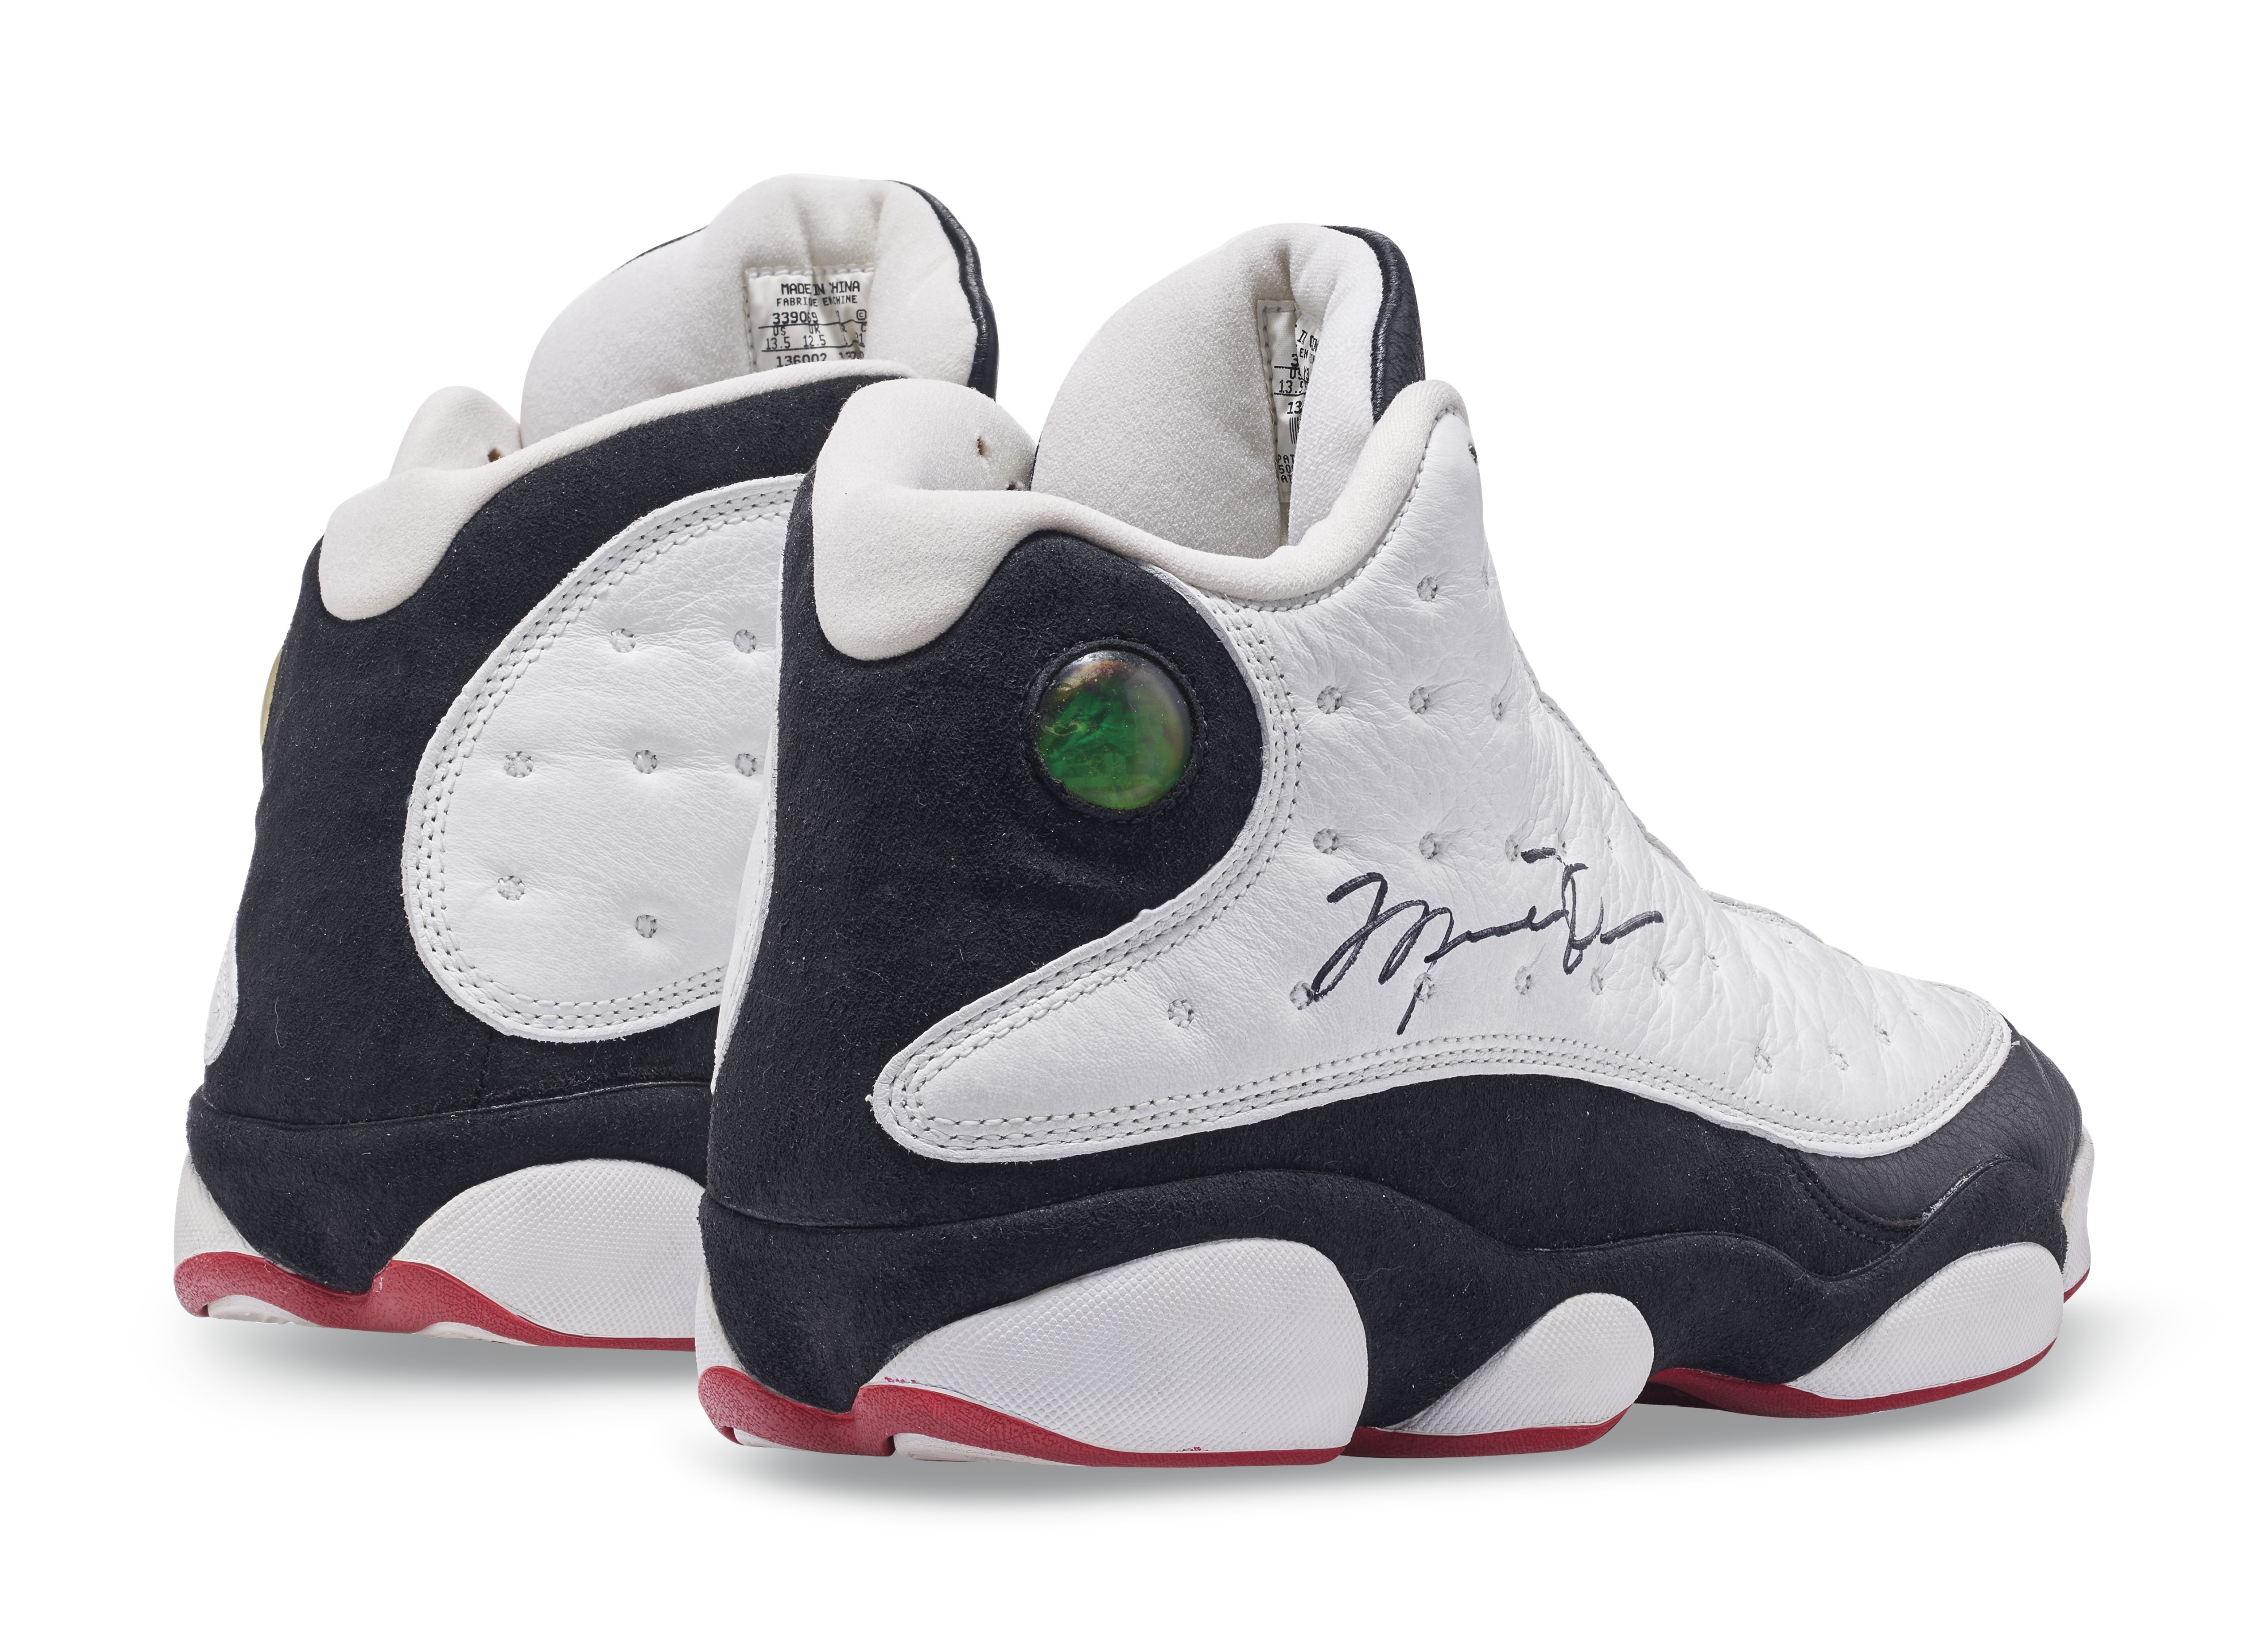 Michael Jordan michael jordans shoes First Jordan Shoe Store Deals, 50% OFF